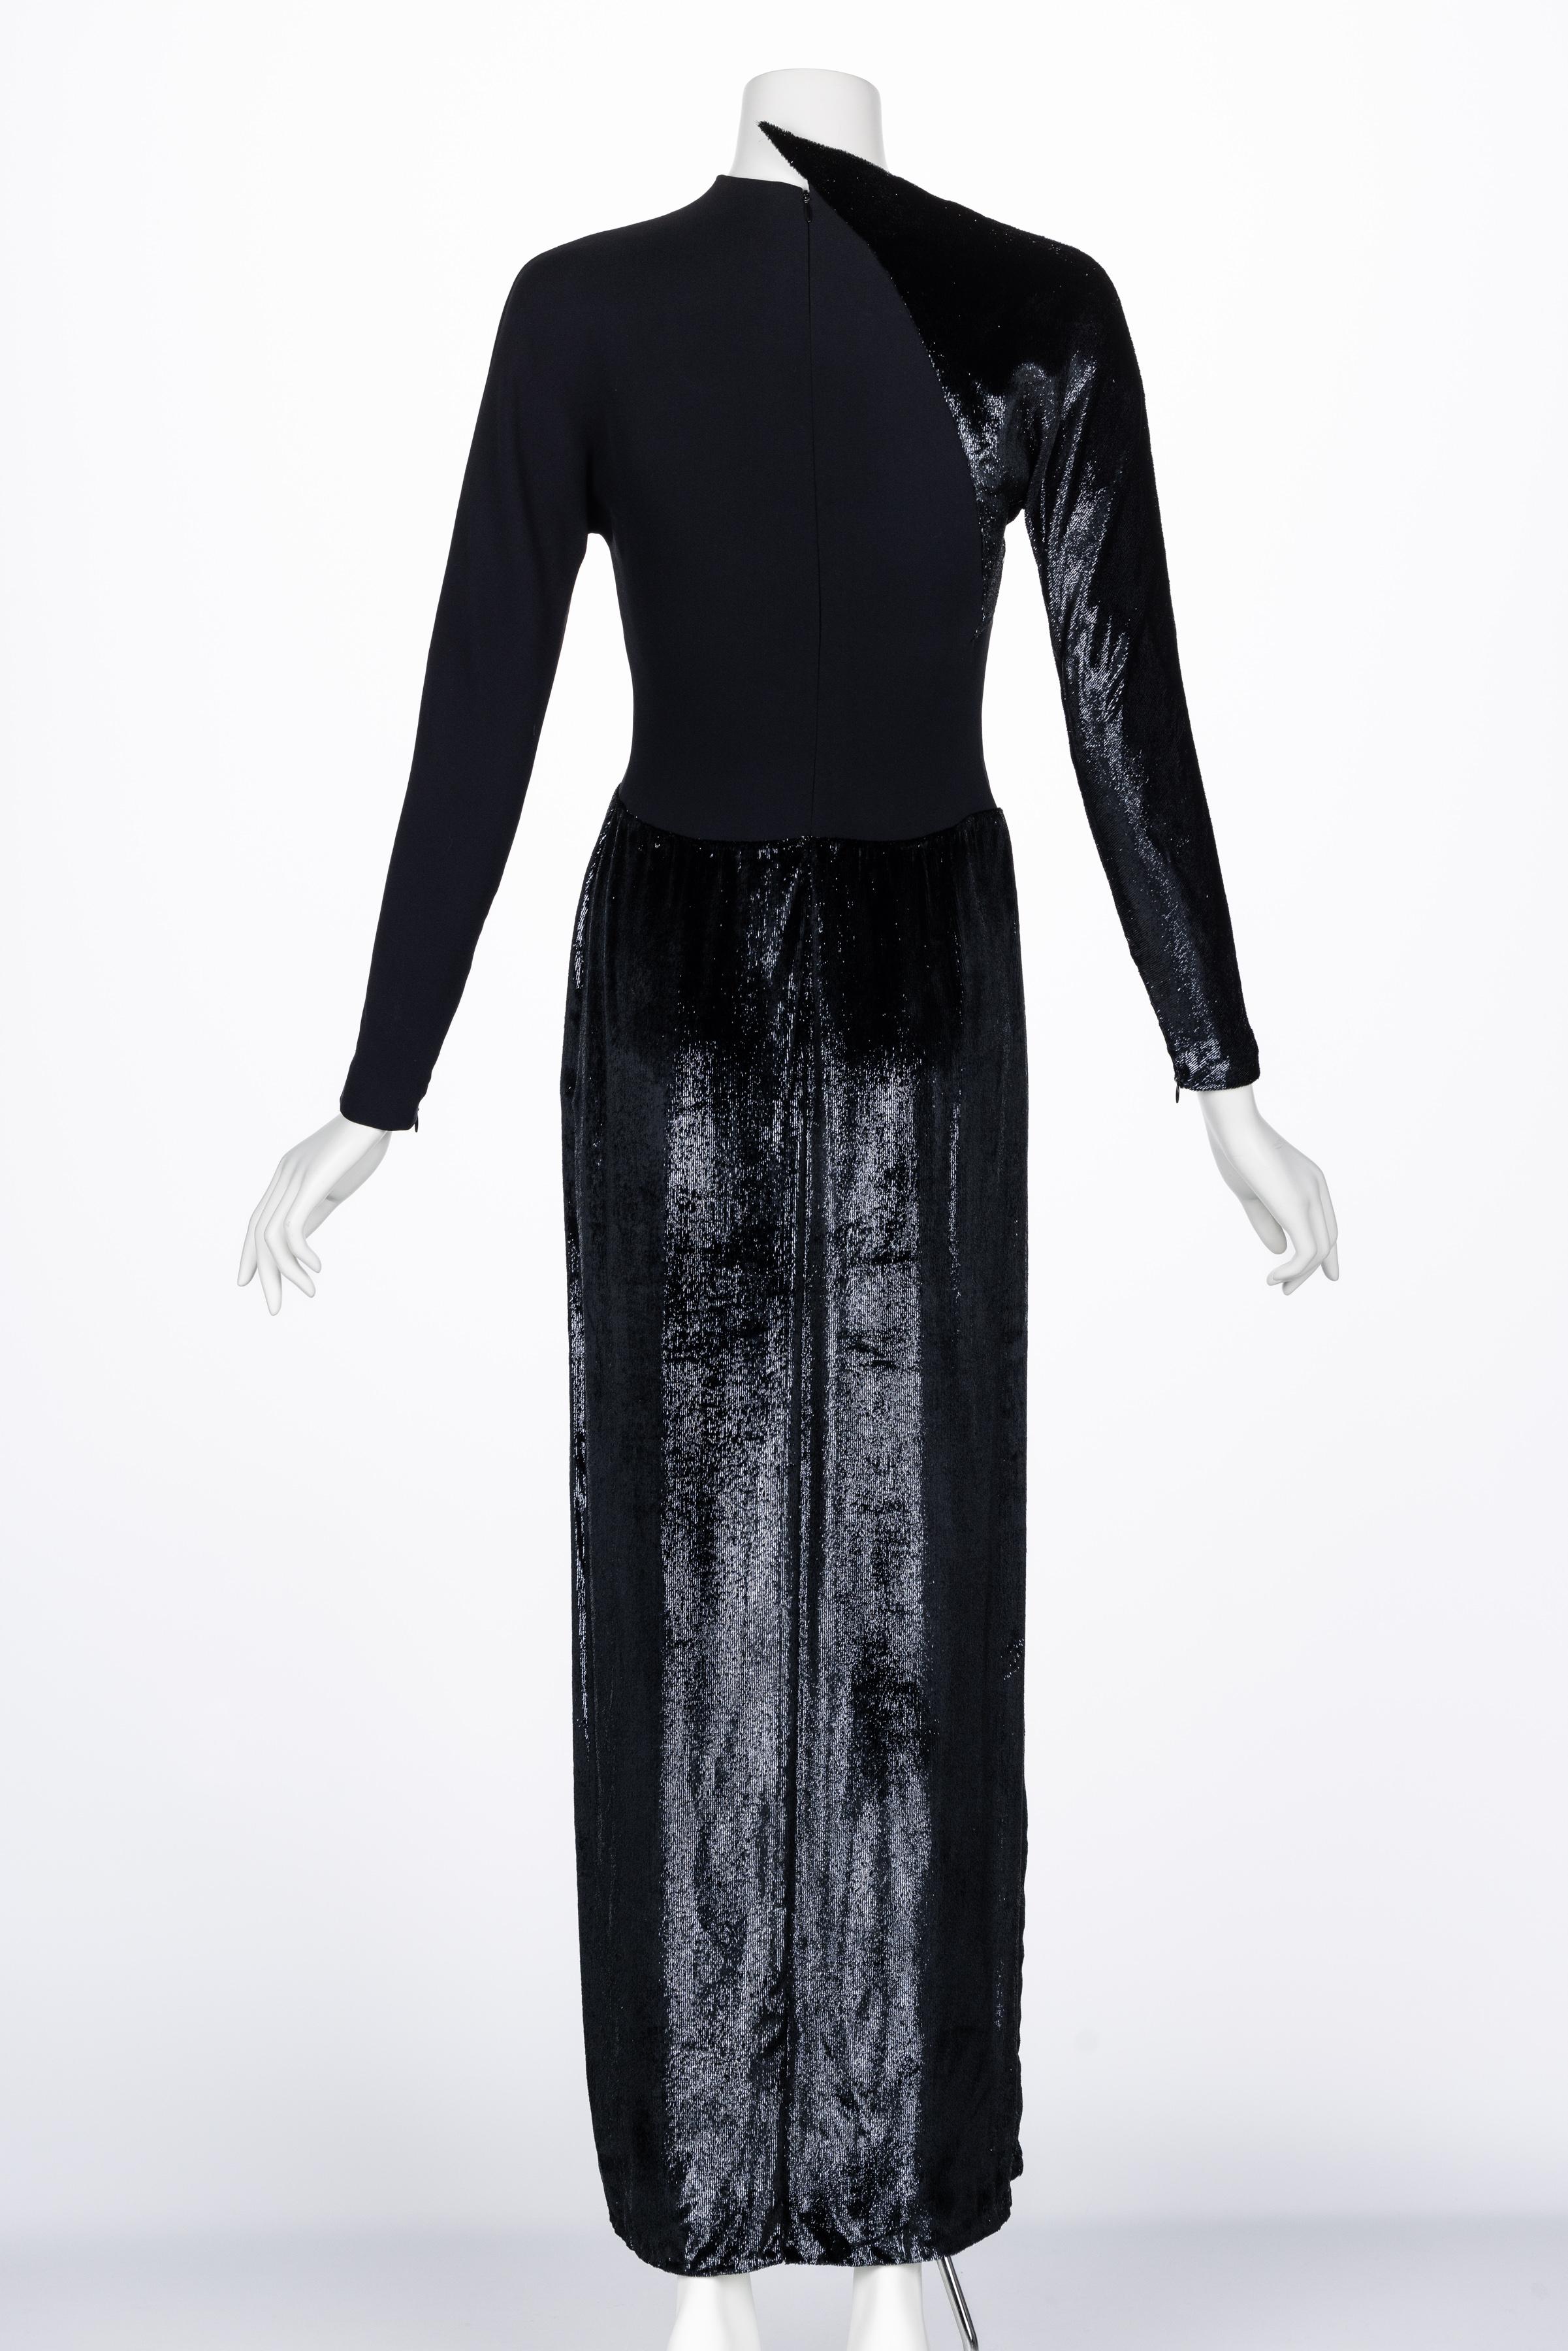 Geoffrey Beene Black Crepe Panne Velvet Dress 1990s For Sale 2